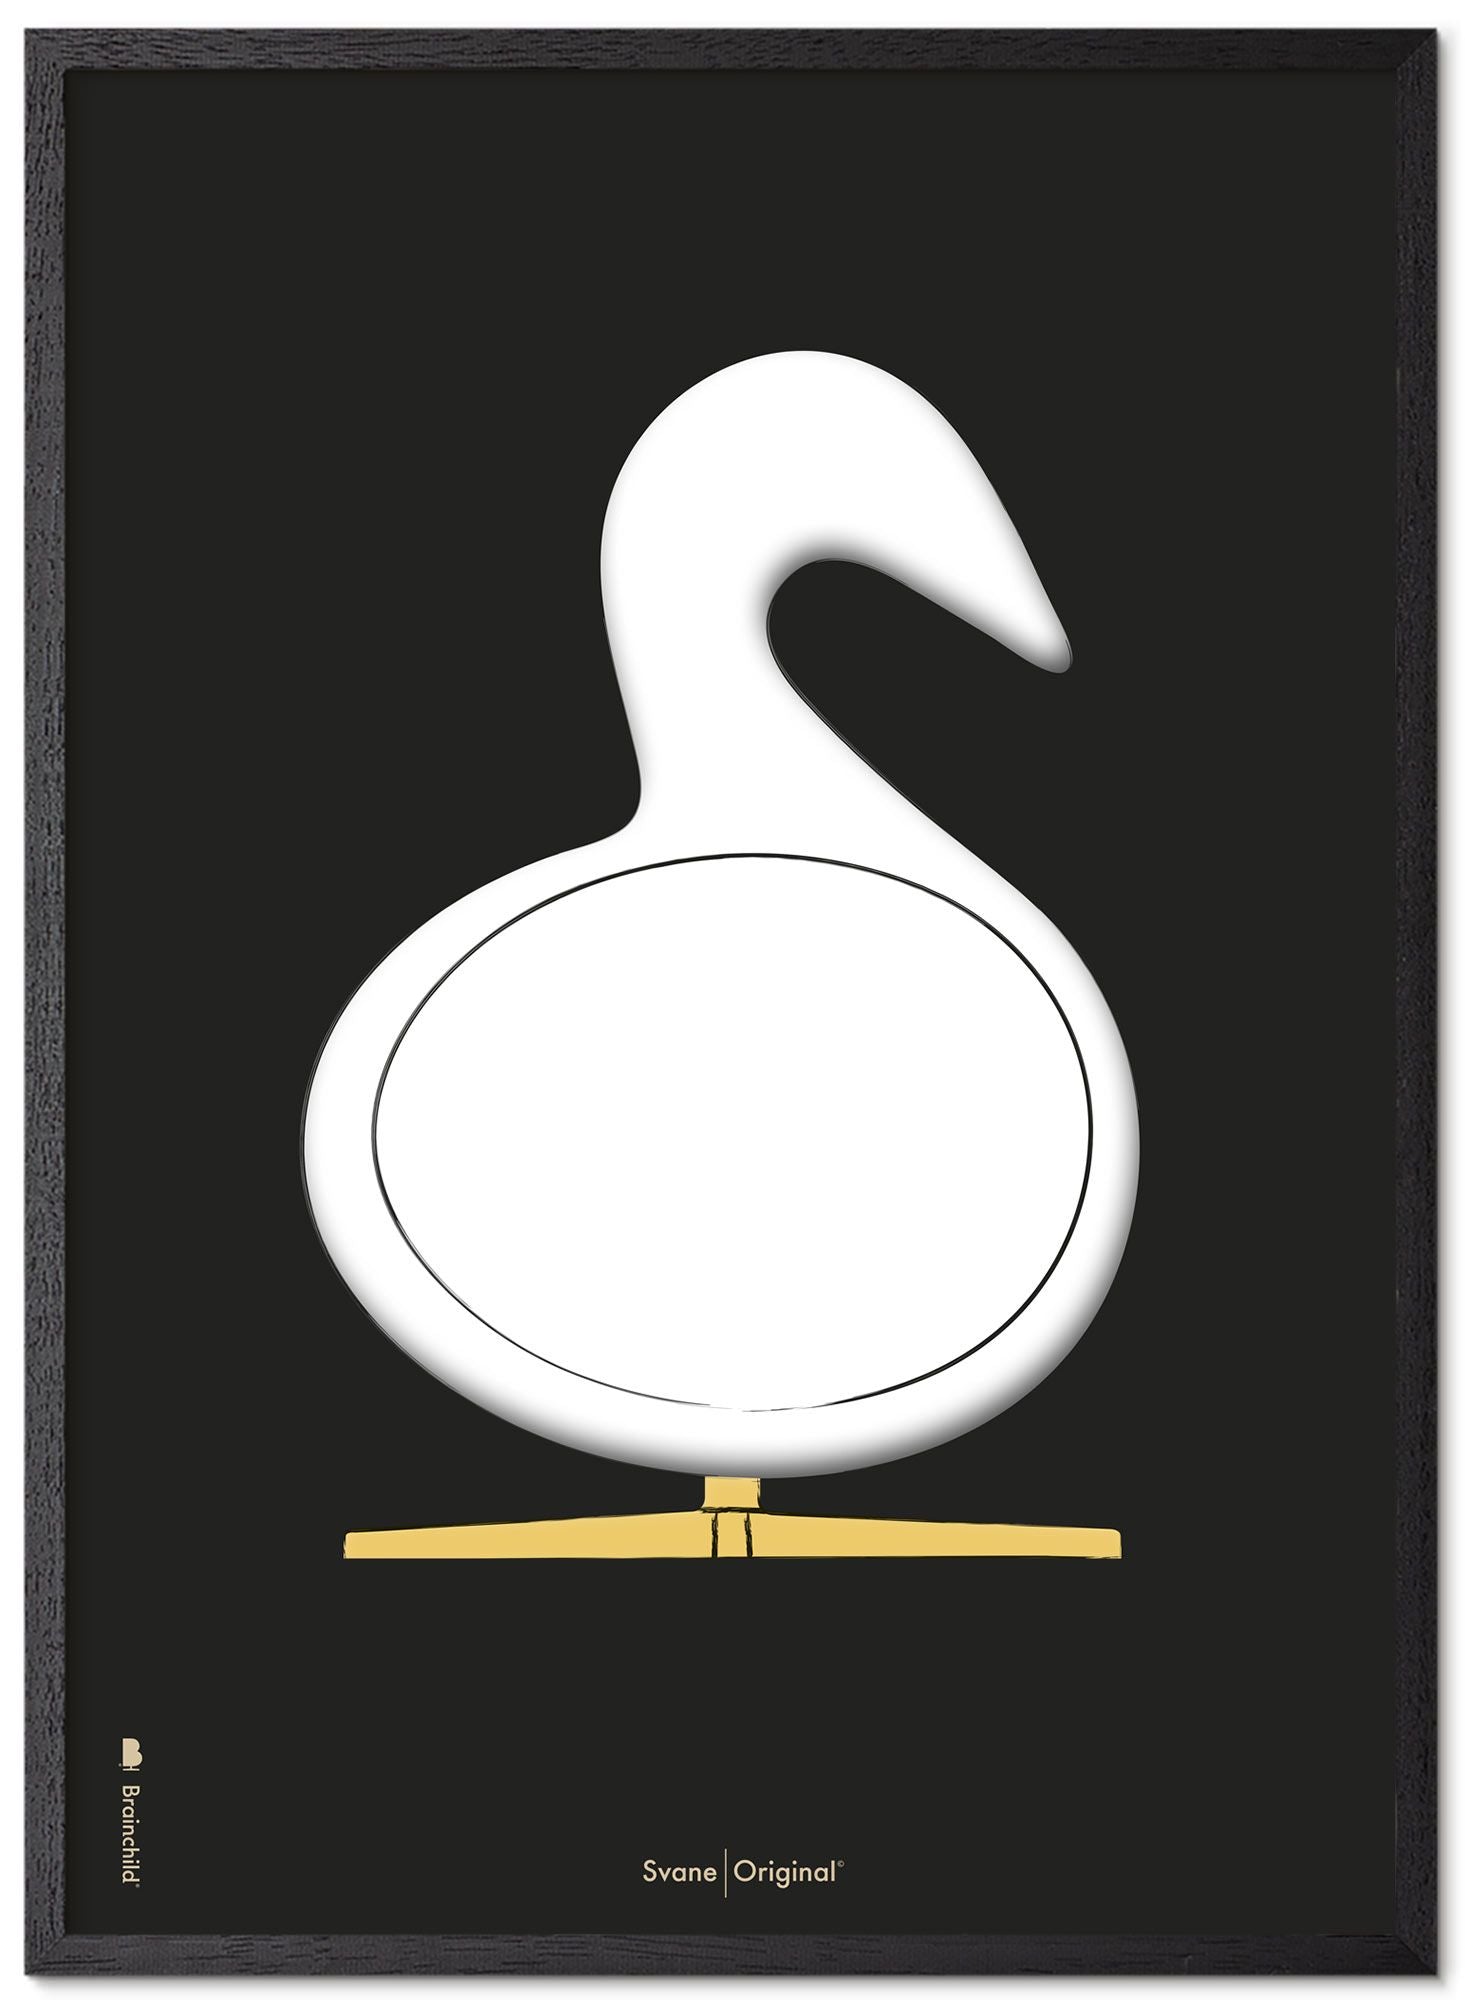 Brainchild Swan Design Sketch Poster Frame Made Of Black Lacquered Wood 30x40 Cm, Black Background